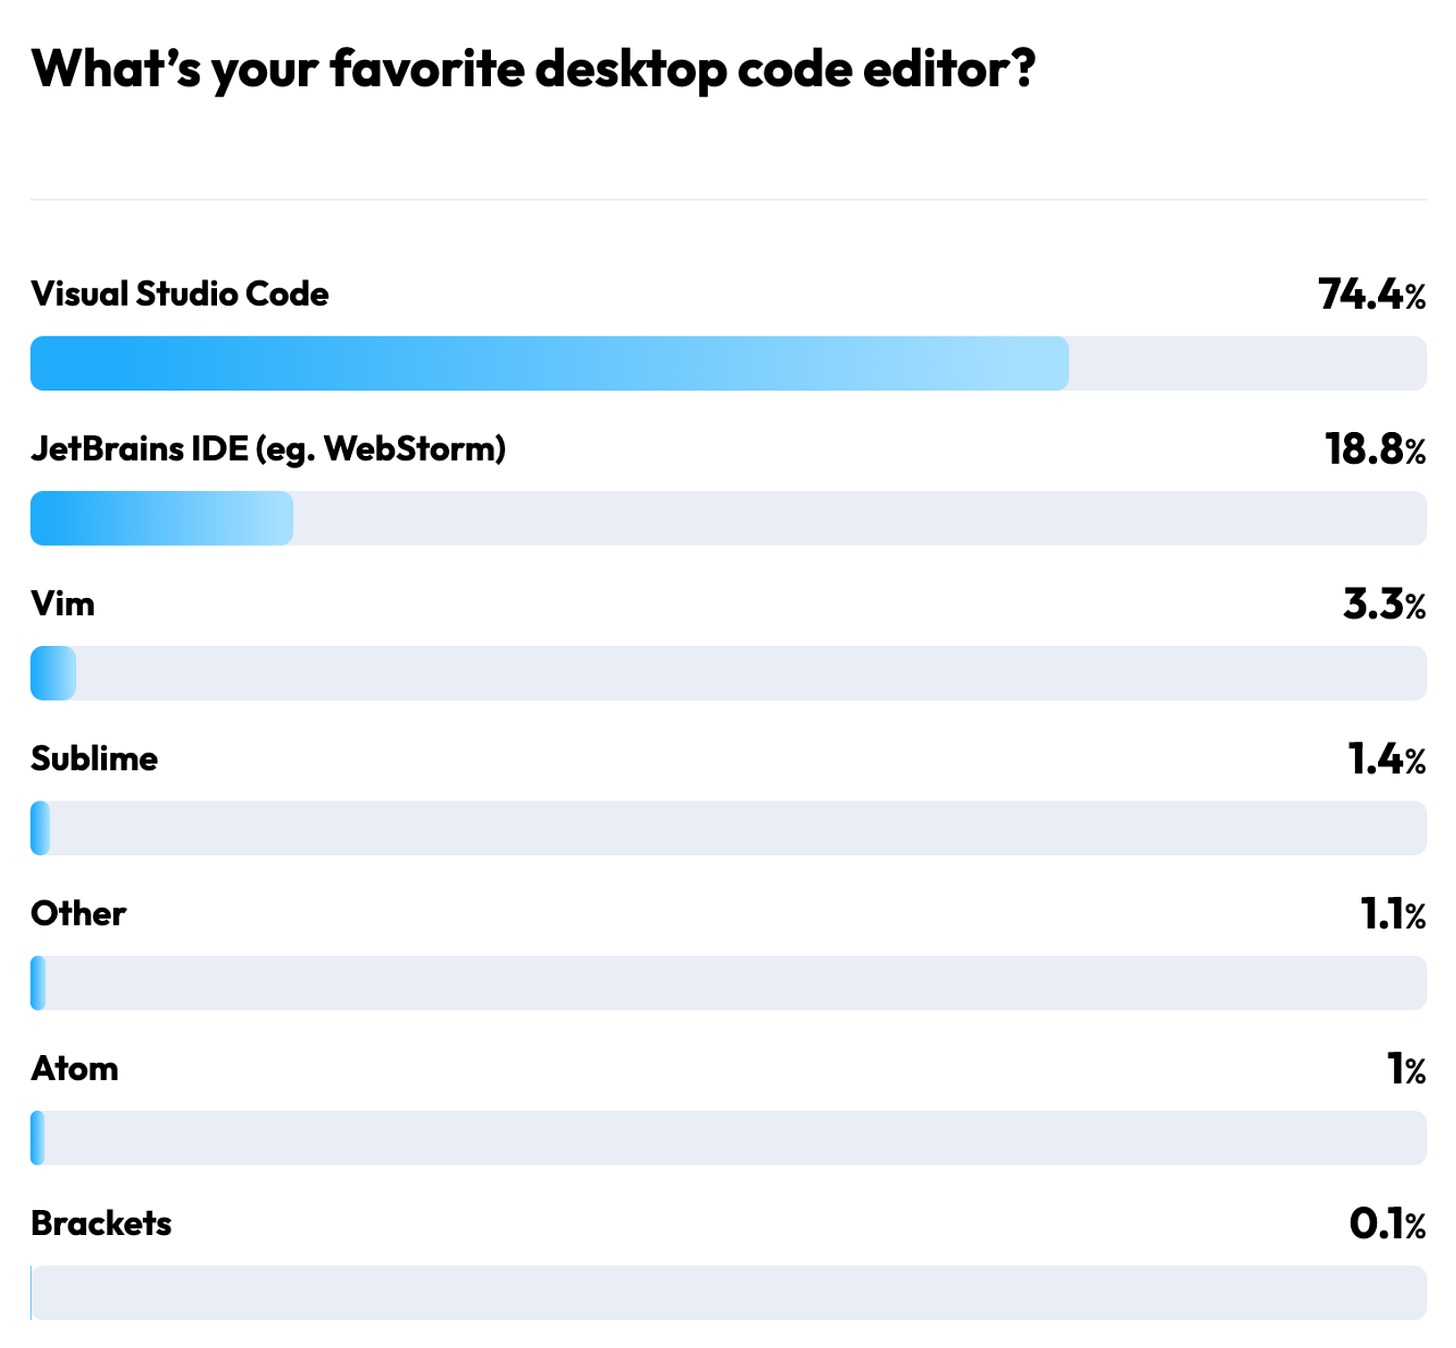 Visual Studio dominates code editors in terms of usage.